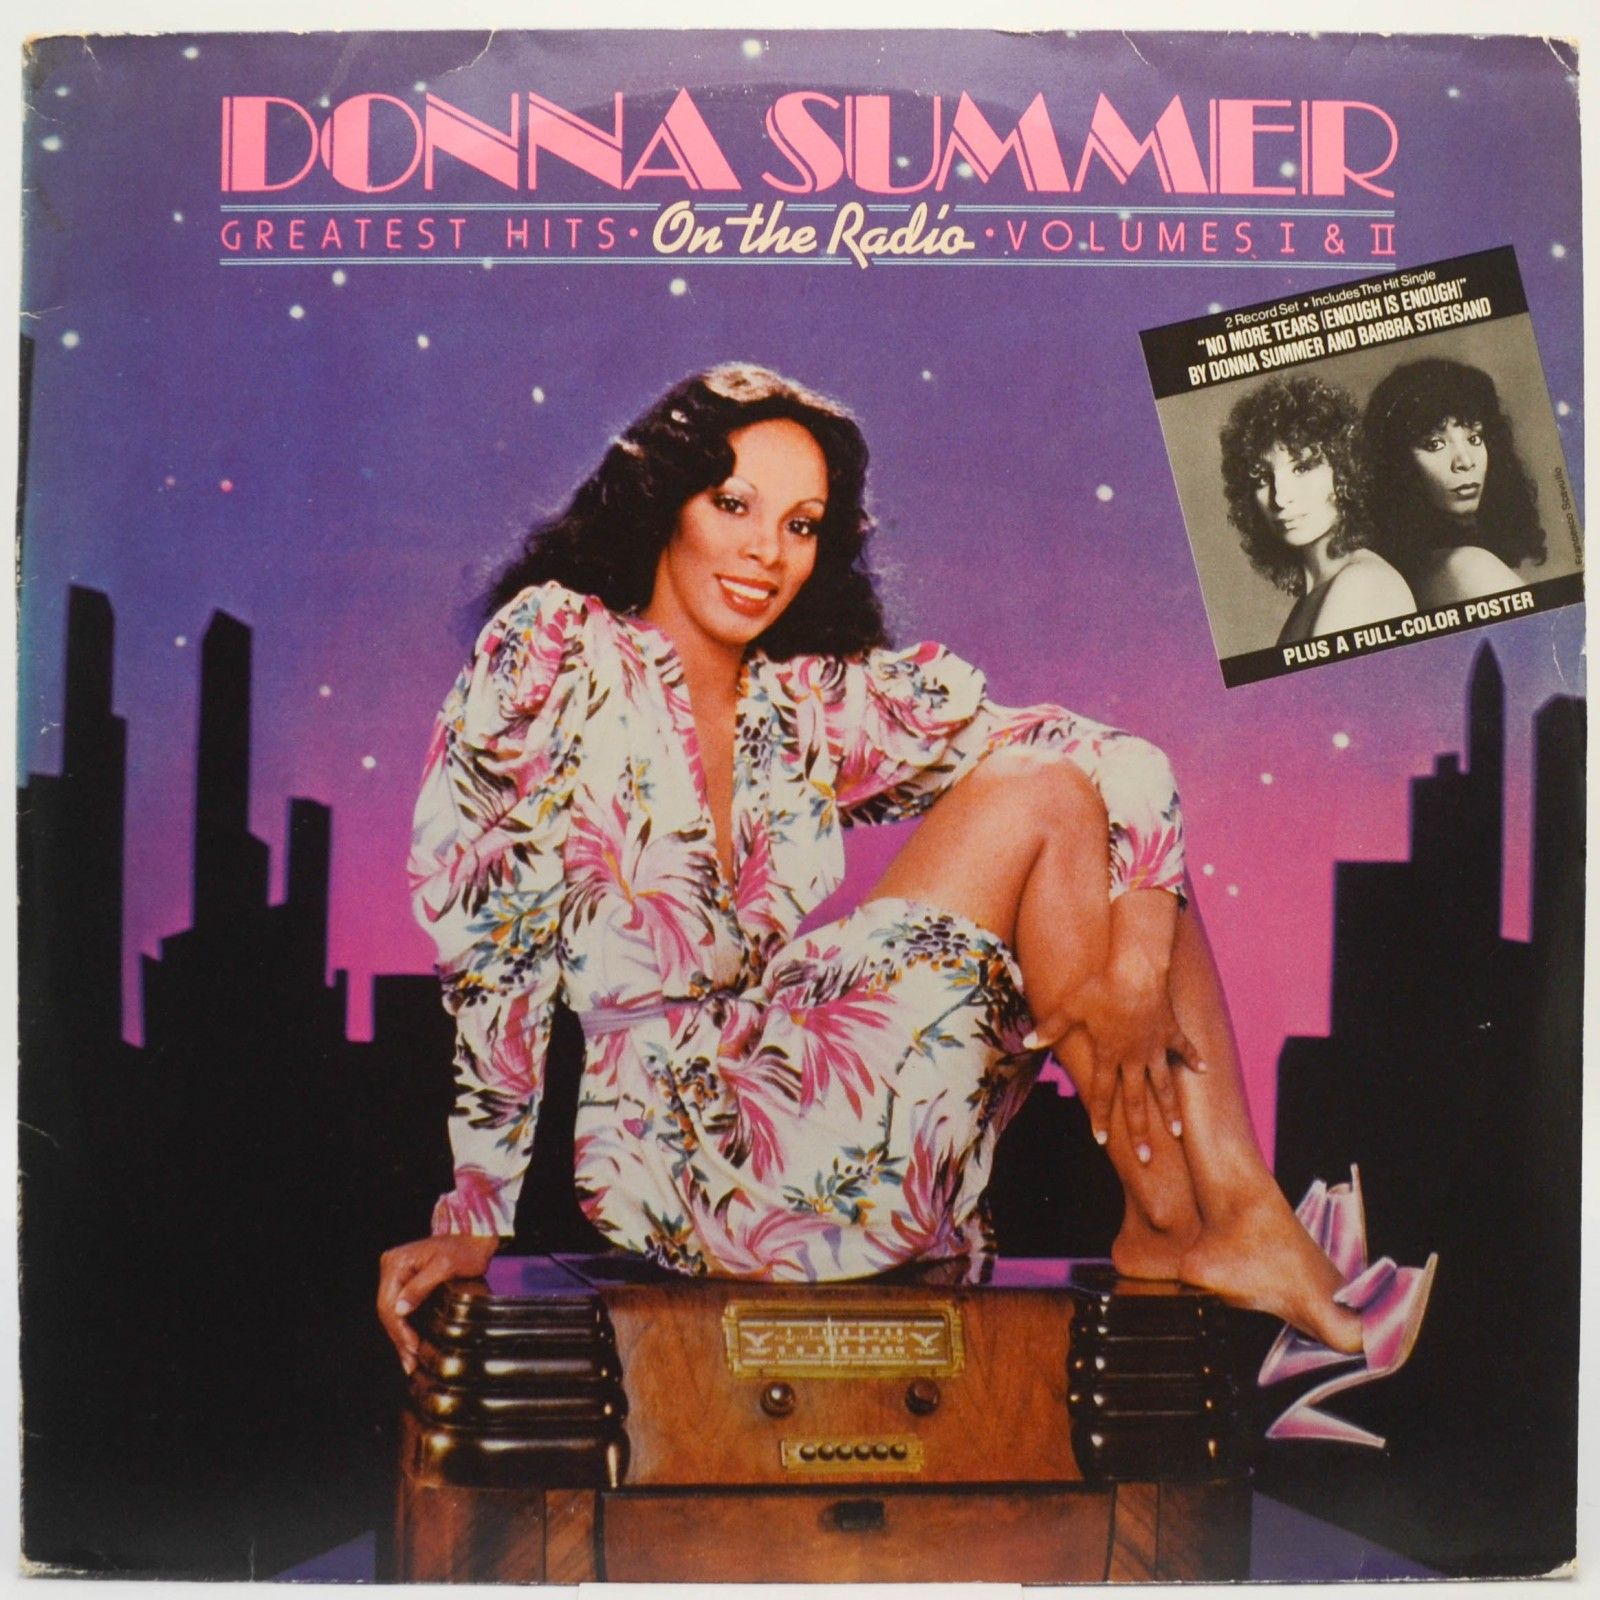 Donna Summer — On The Radio - Greatest Hits Volumes I & II (2LP), 1979